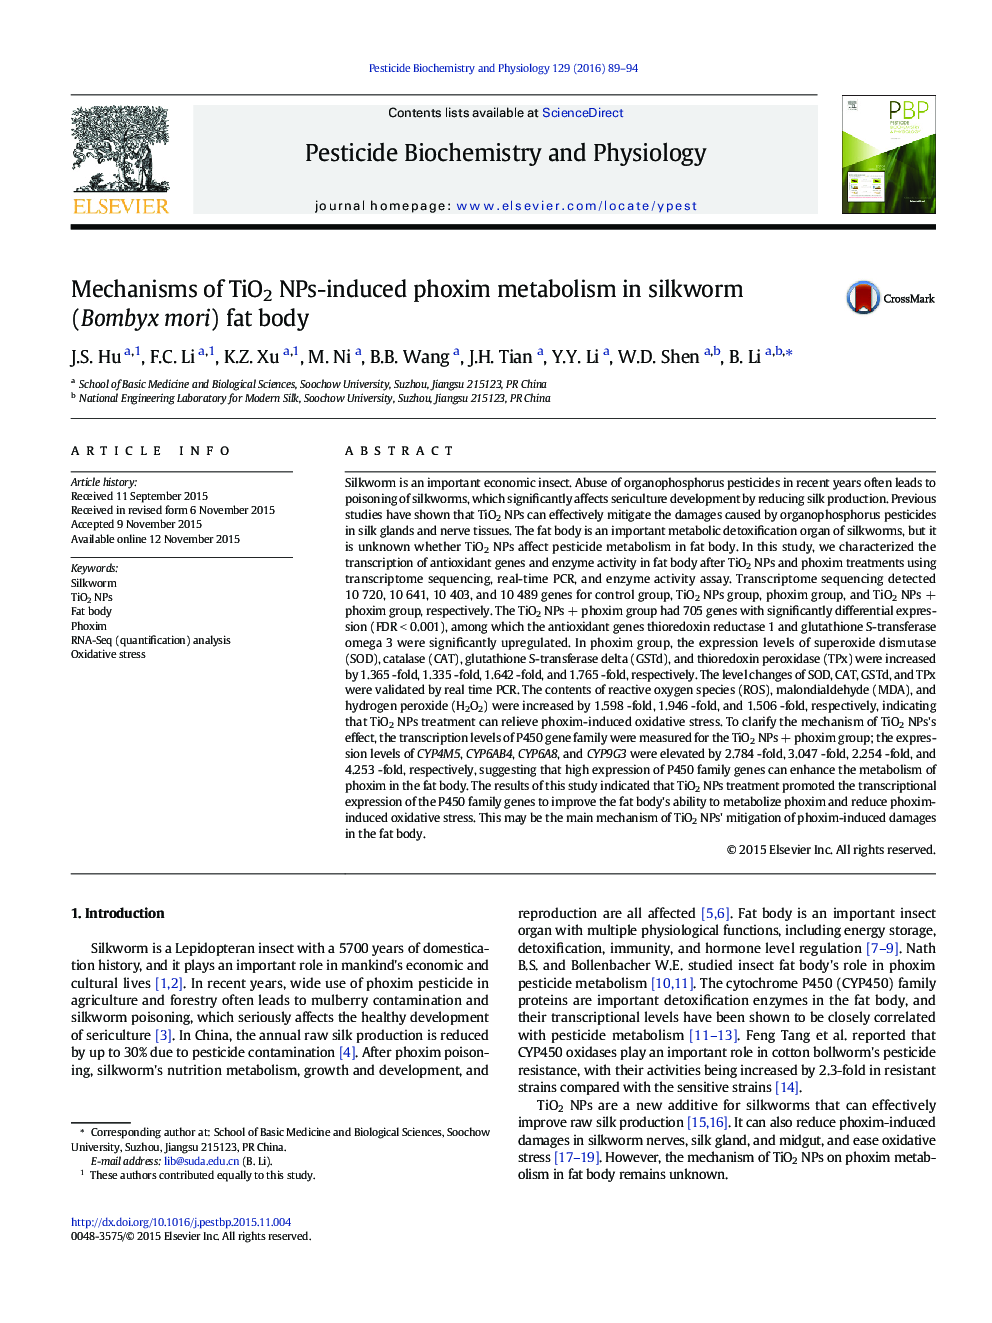 Mechanisms of TiO2 NPs-induced phoxim metabolism in silkworm (Bombyx mori) fat body